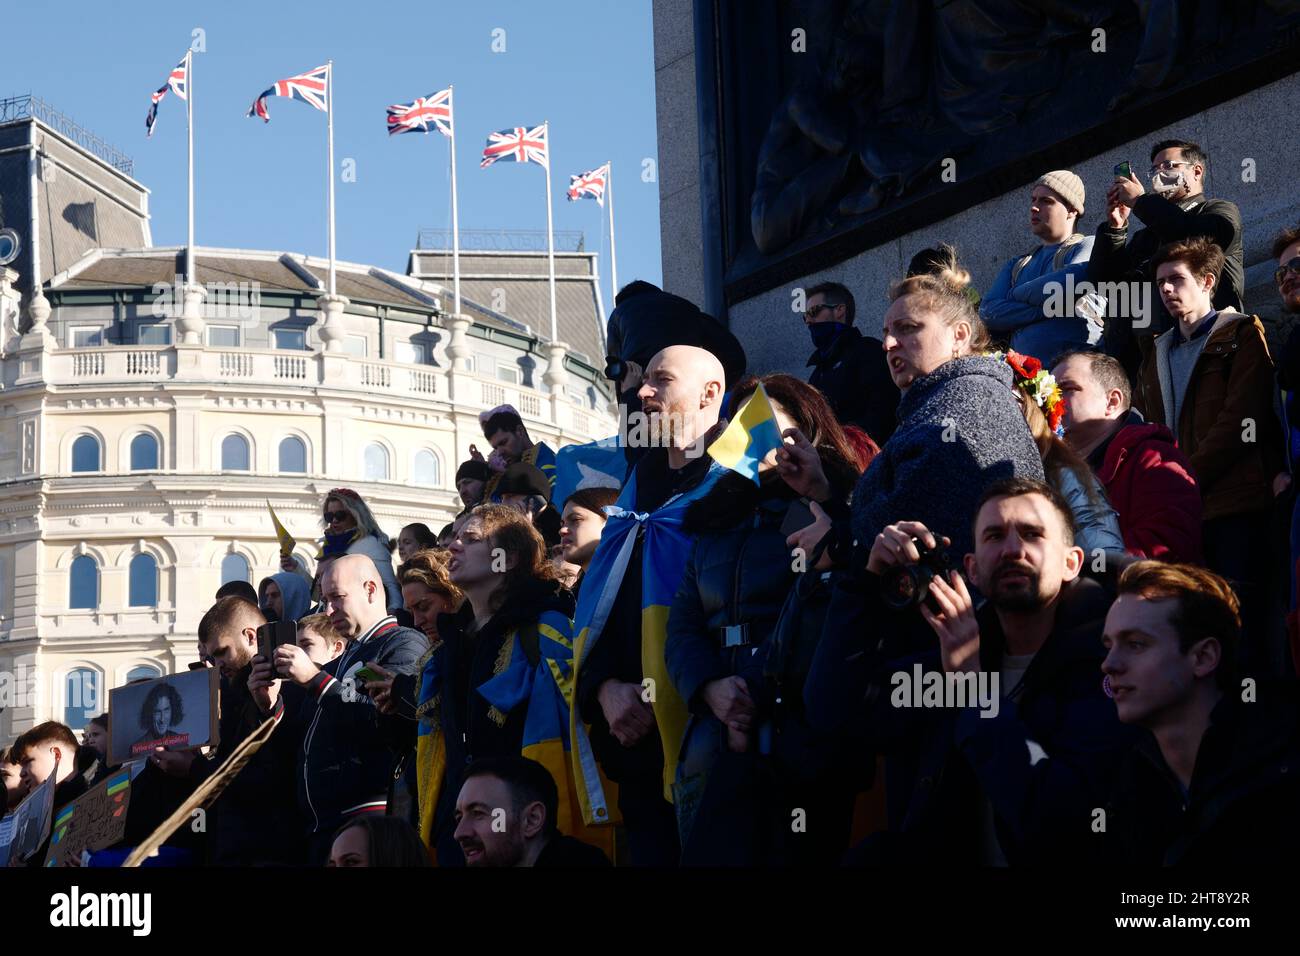 Crowd of protestors, base of Nelson's column, protest against Russia's invasion of Ukraine, Trafalgar Square, London, UK, 27 February 2022 Stock Photo